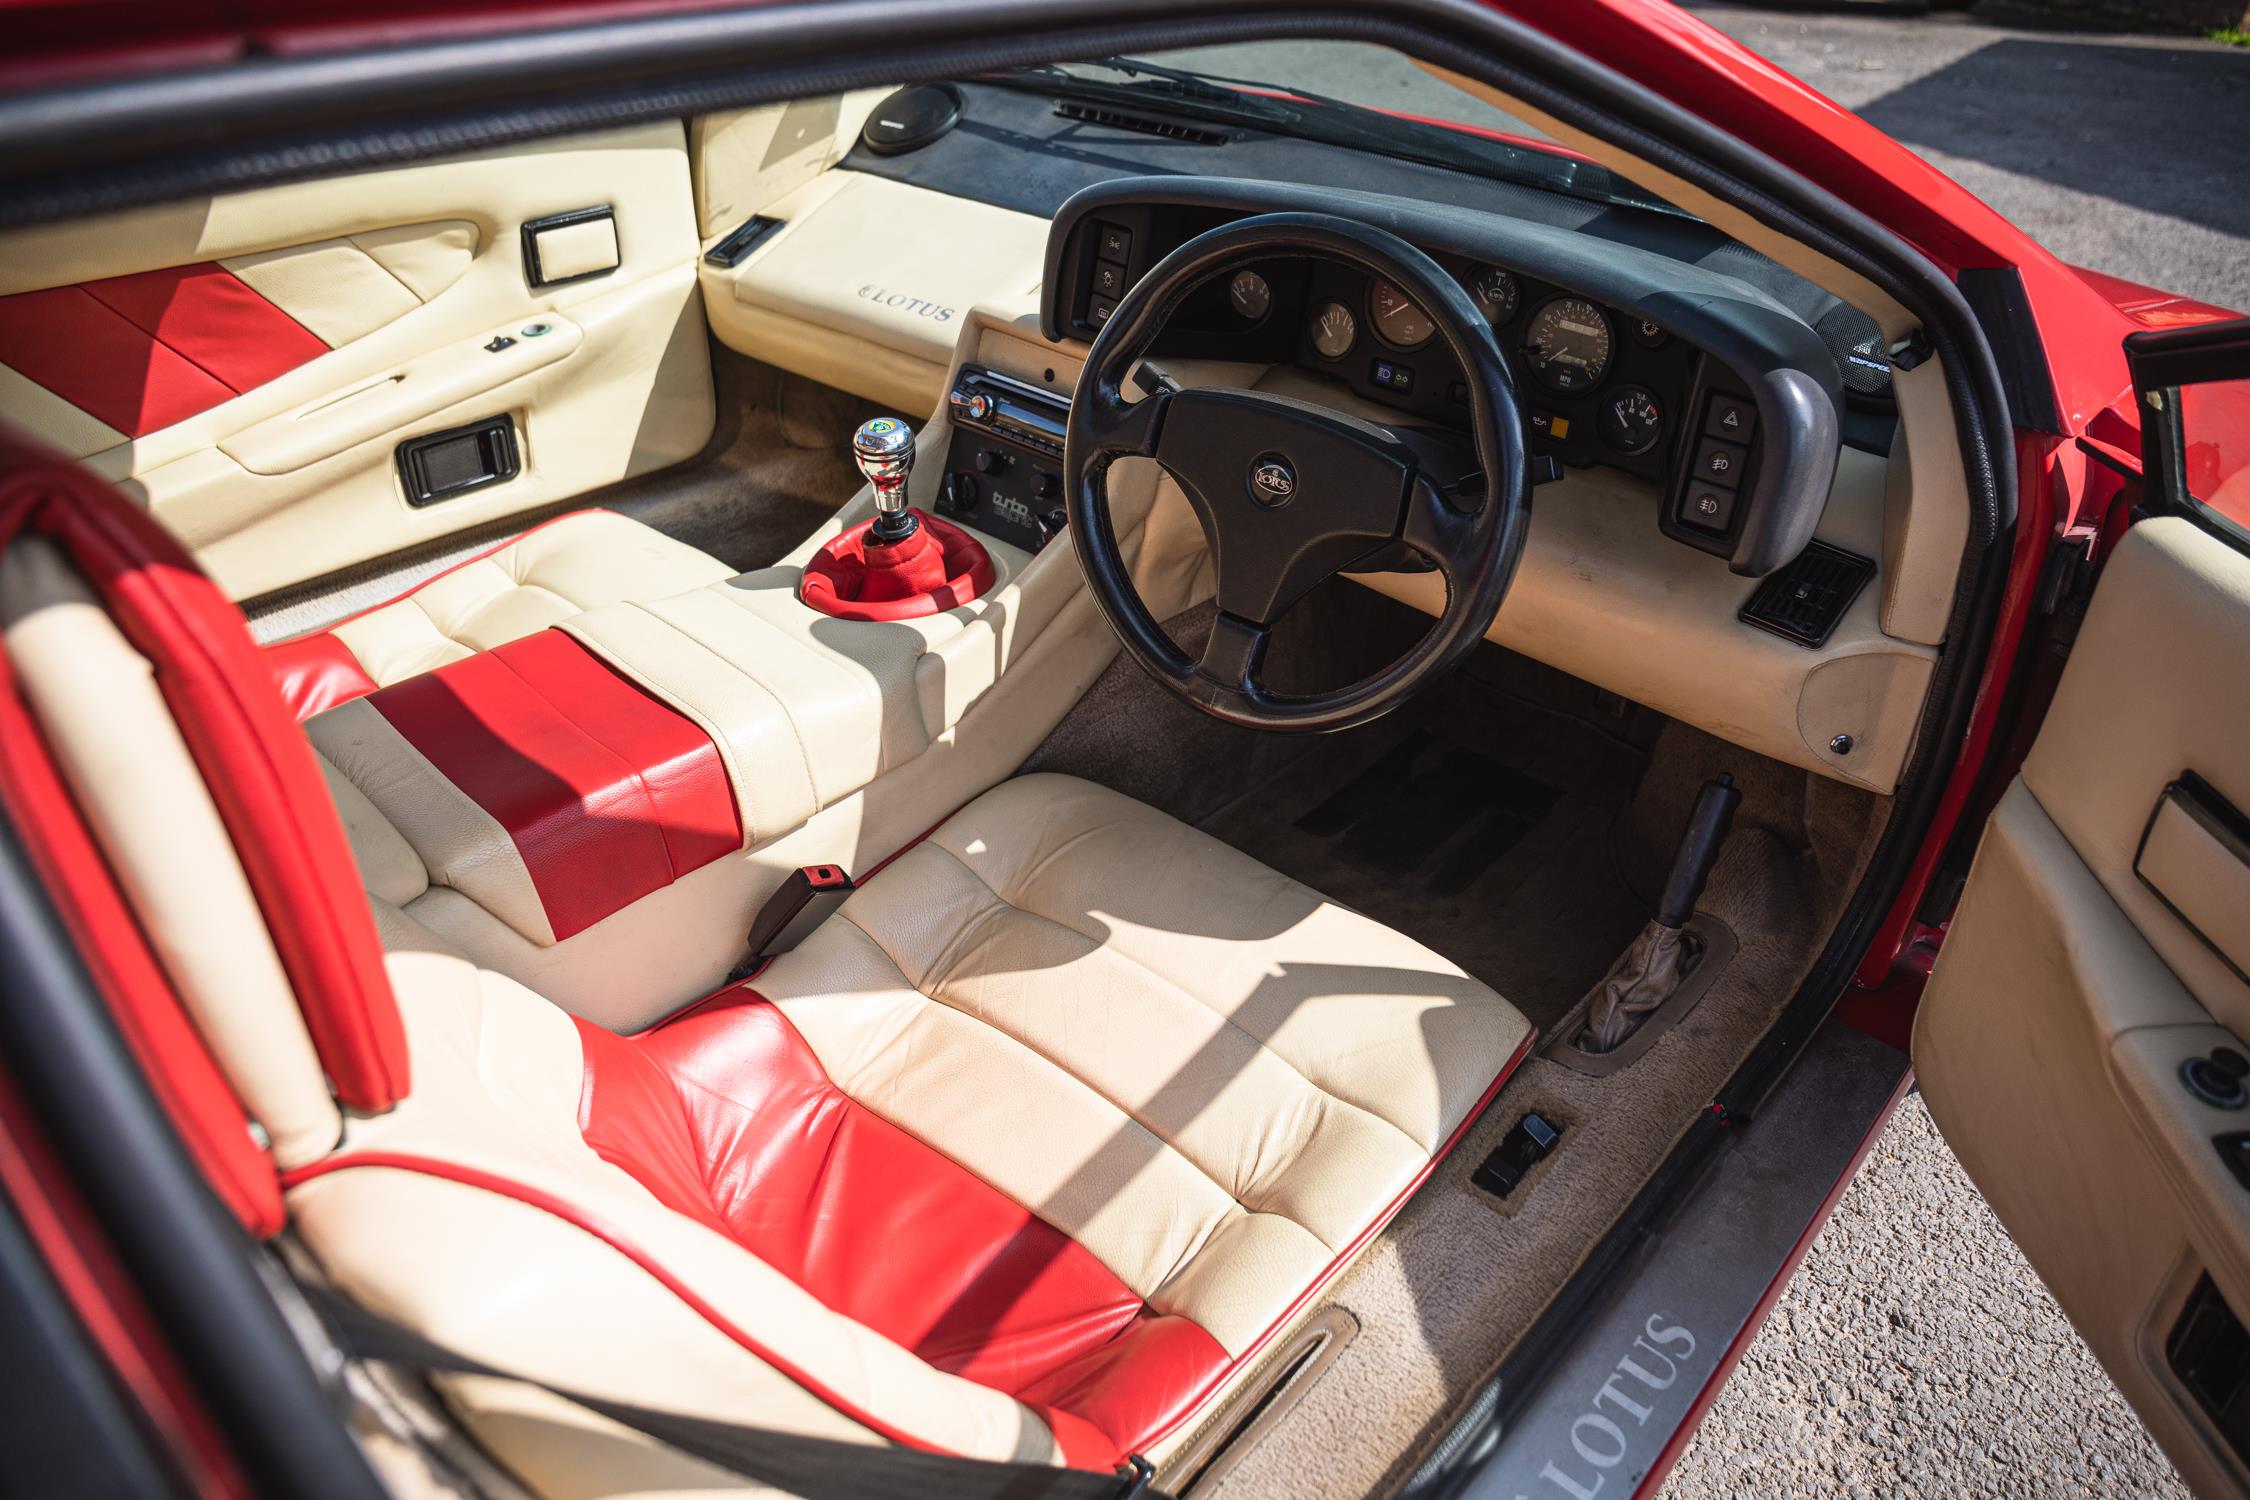 1988 Lotus Esprit Turbo X180 - Image 2 of 10